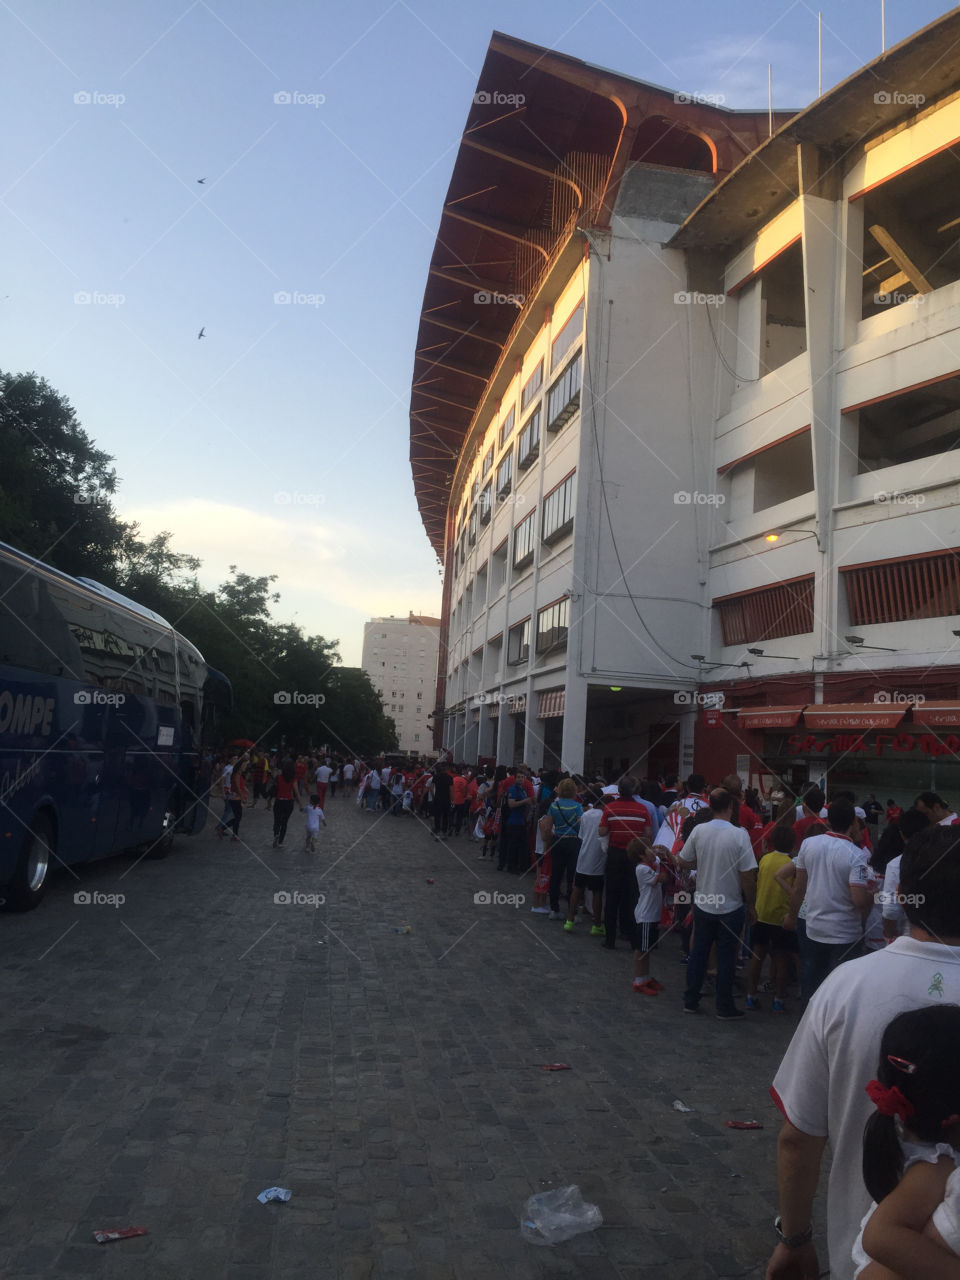 Line for Sevilla futbol game